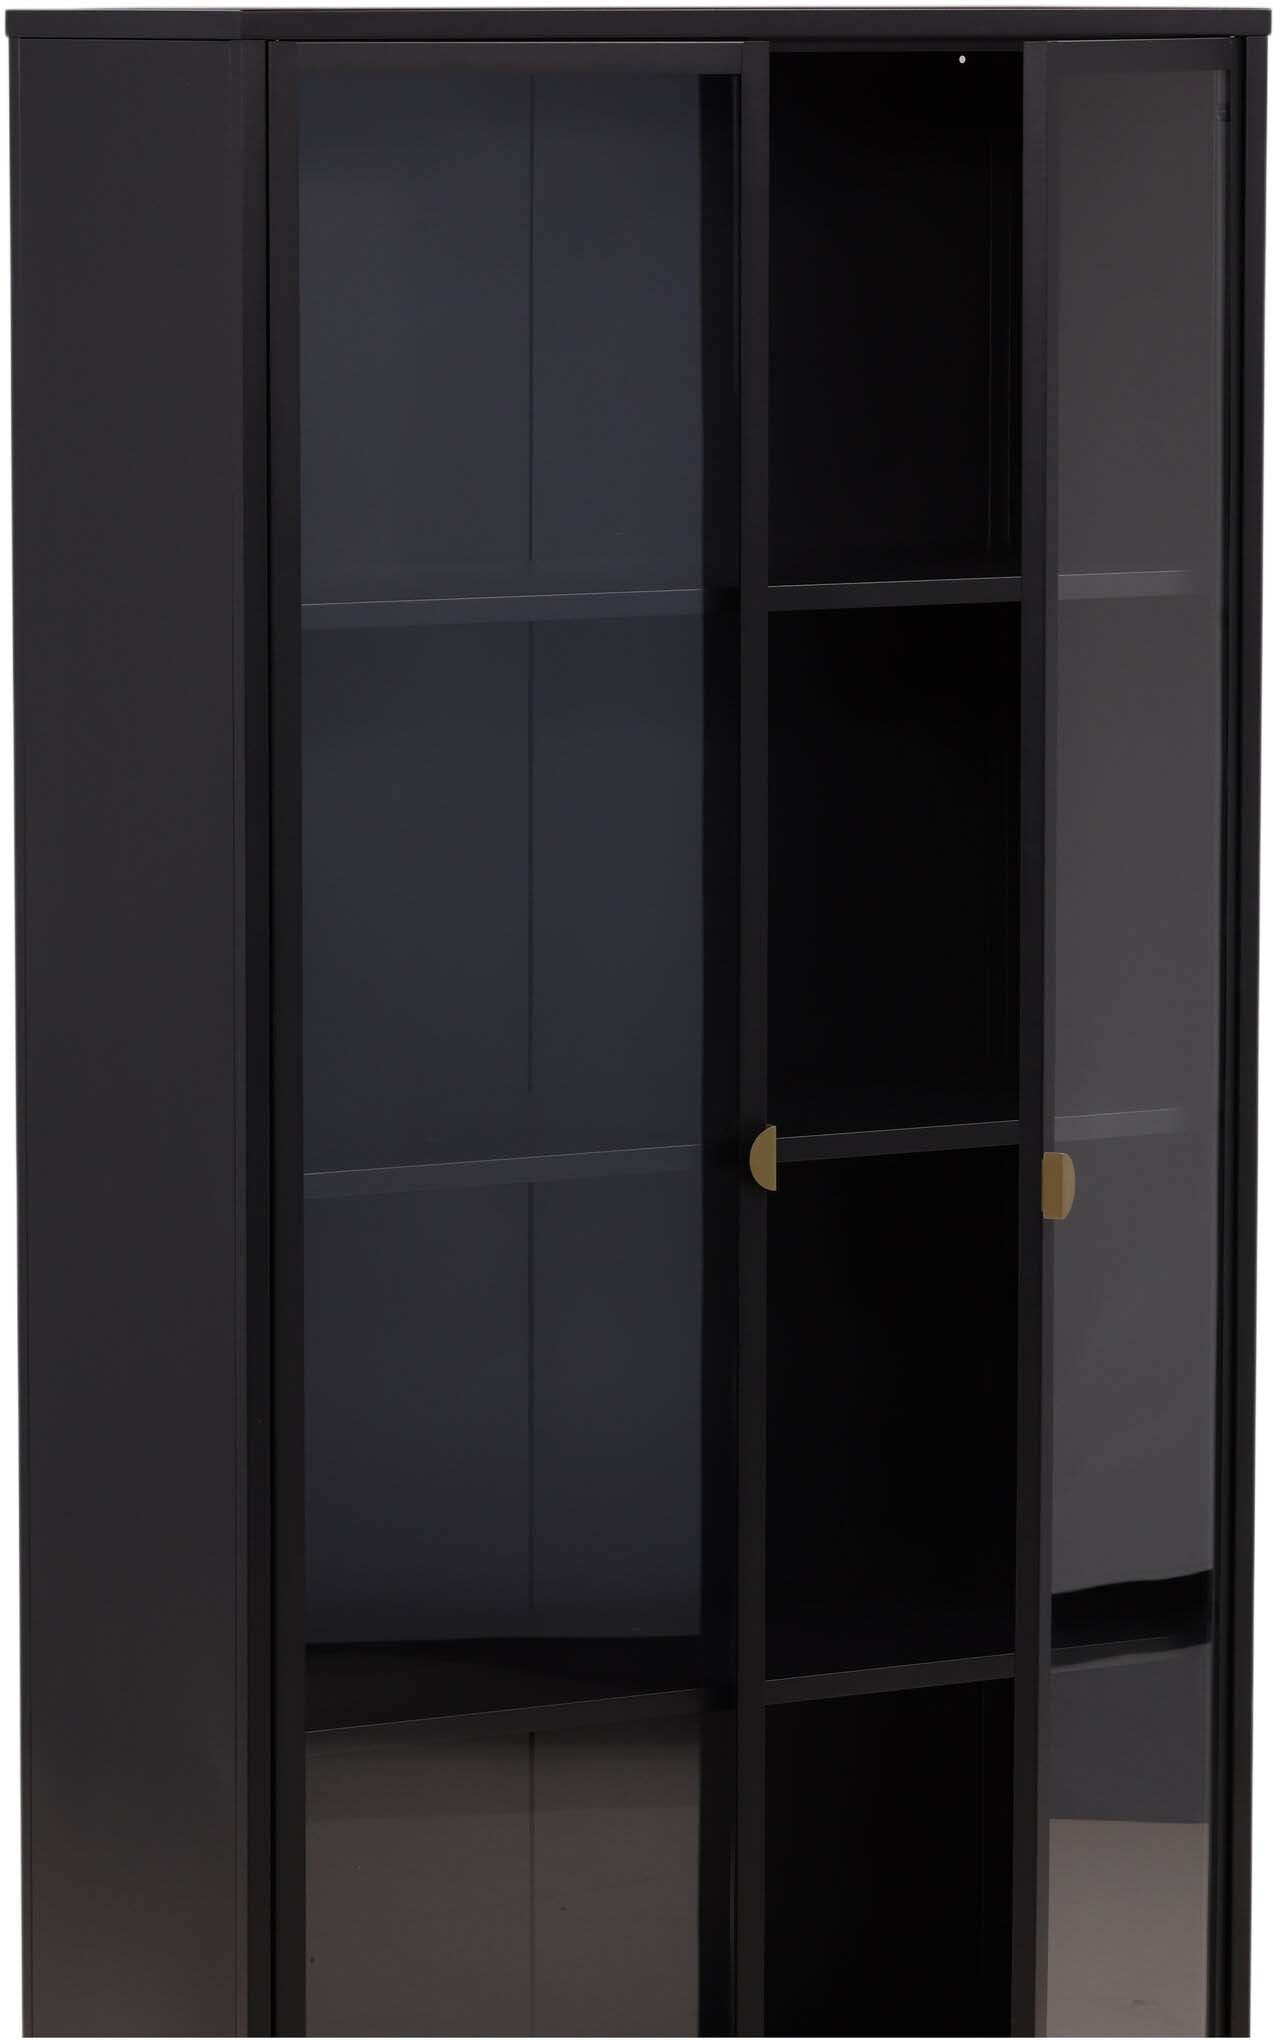 Piring Cabinet - KAQTU Design